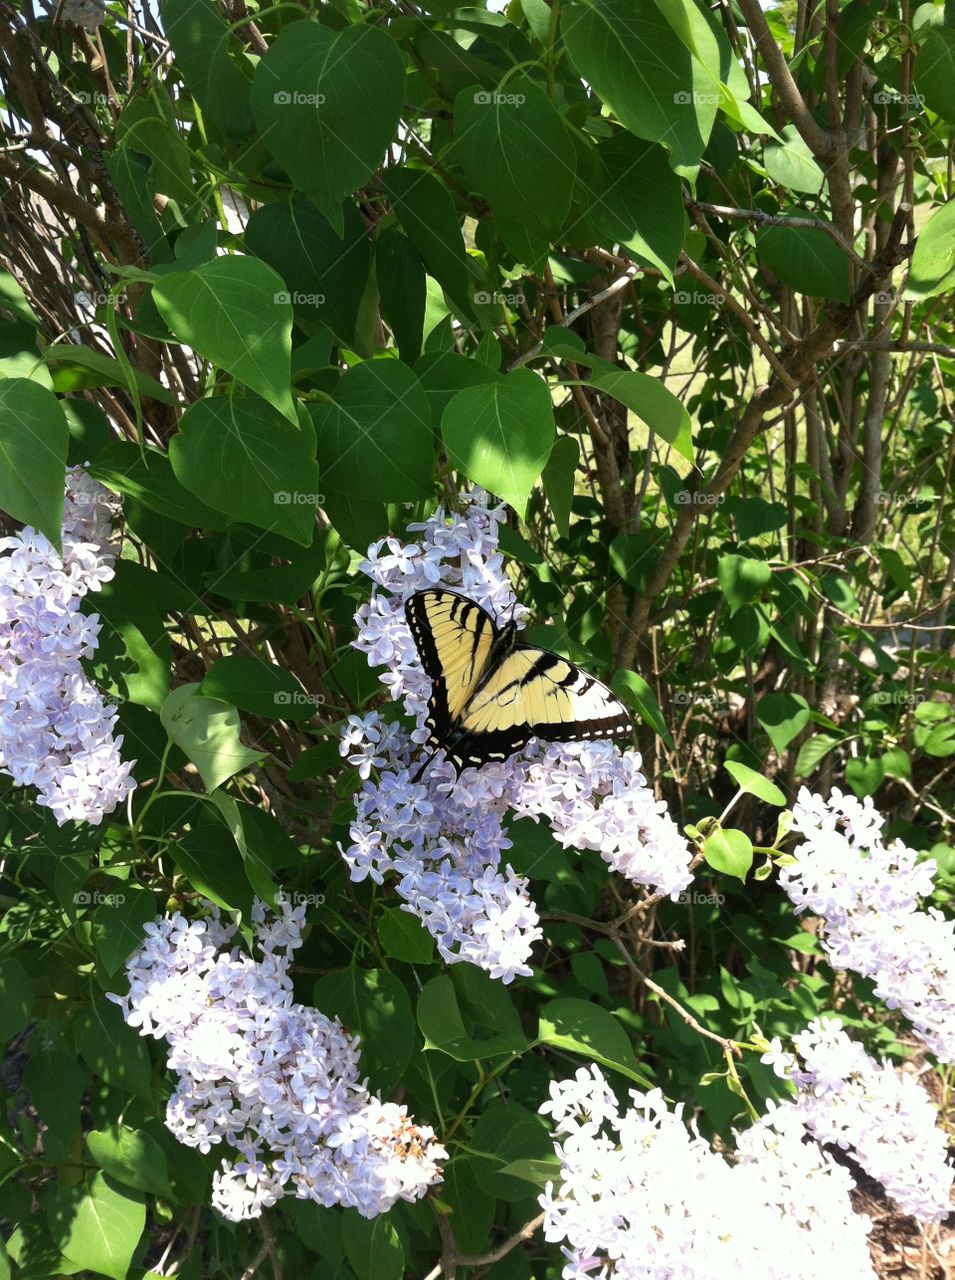 An eastern tiger swallowtail butterfly on a bush.